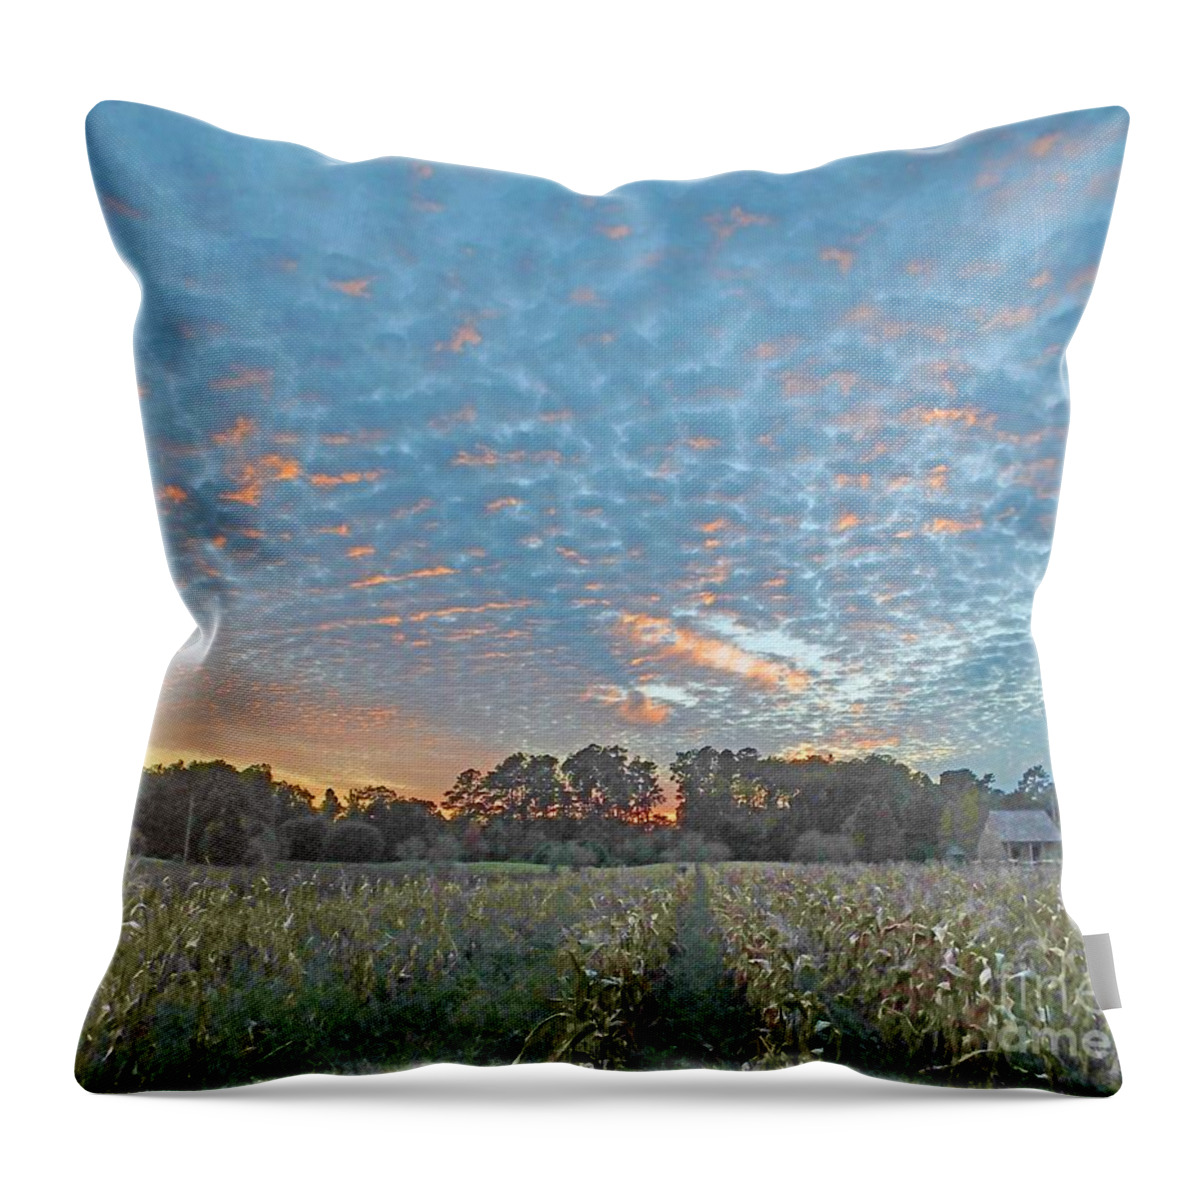 Landscape Throw Pillow featuring the digital art Burden Rural Life Center Center Cornfield Baton Rouge Louisiana by Lizi Beard-Ward